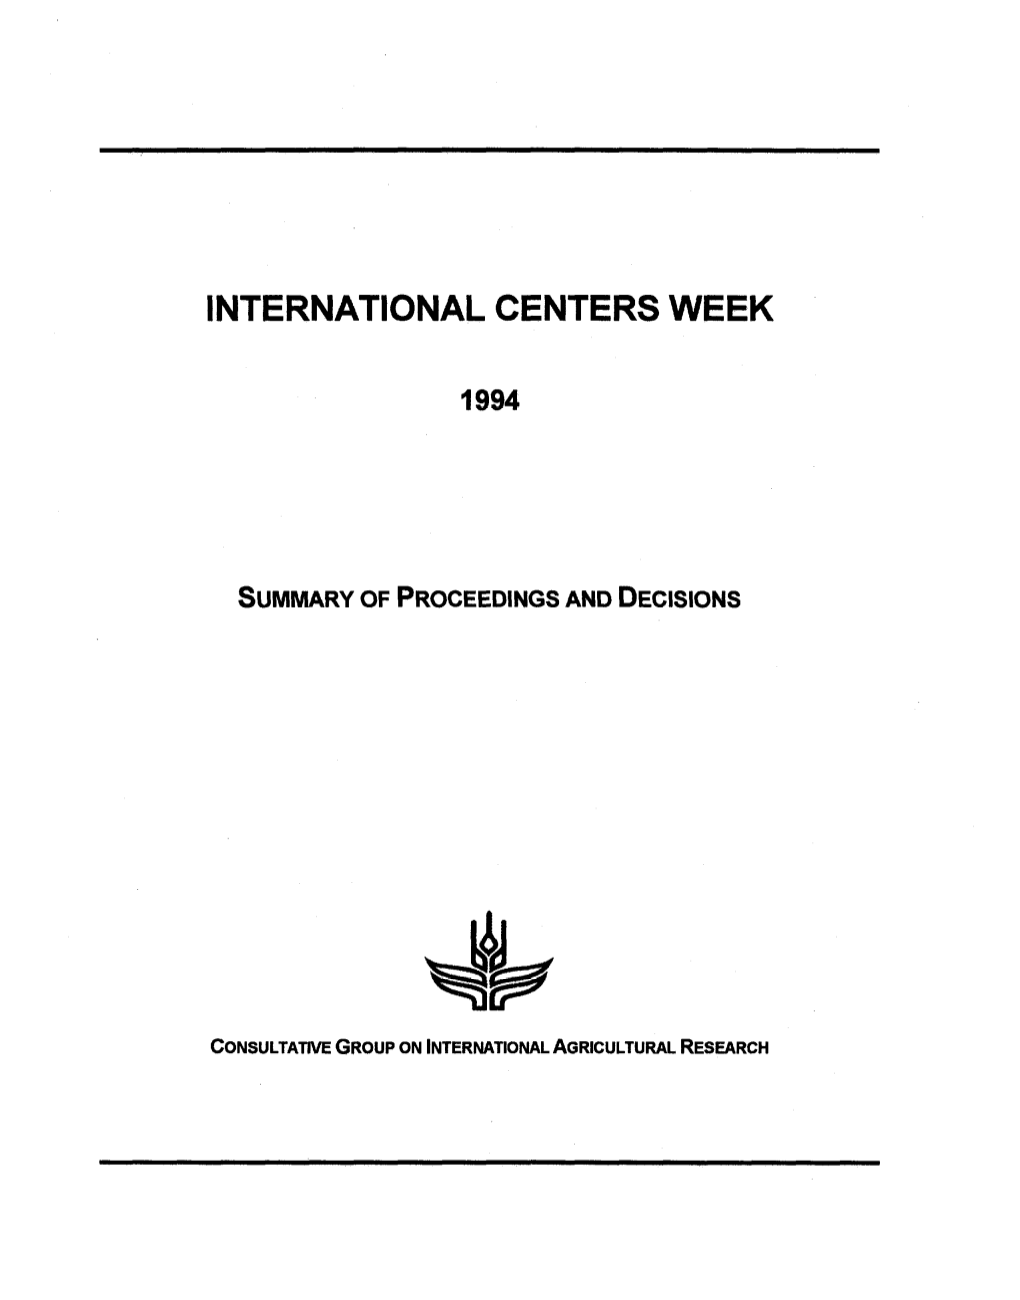 International Centers Week